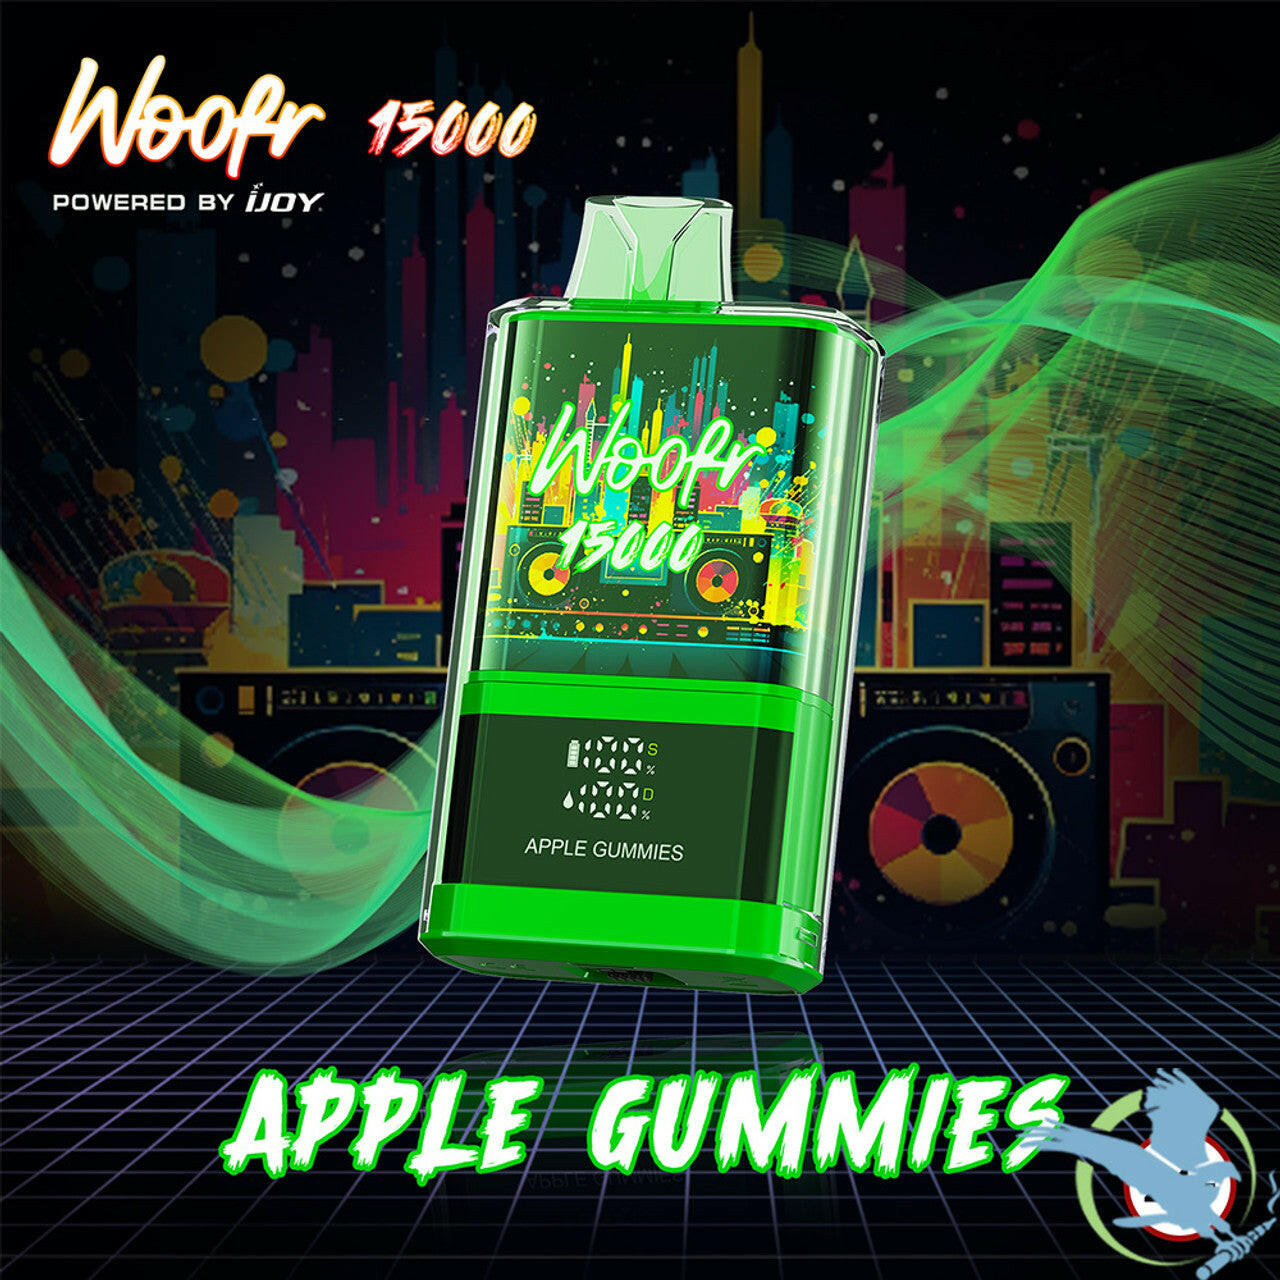 Woofr 15000 Disposable - Apple Gummies